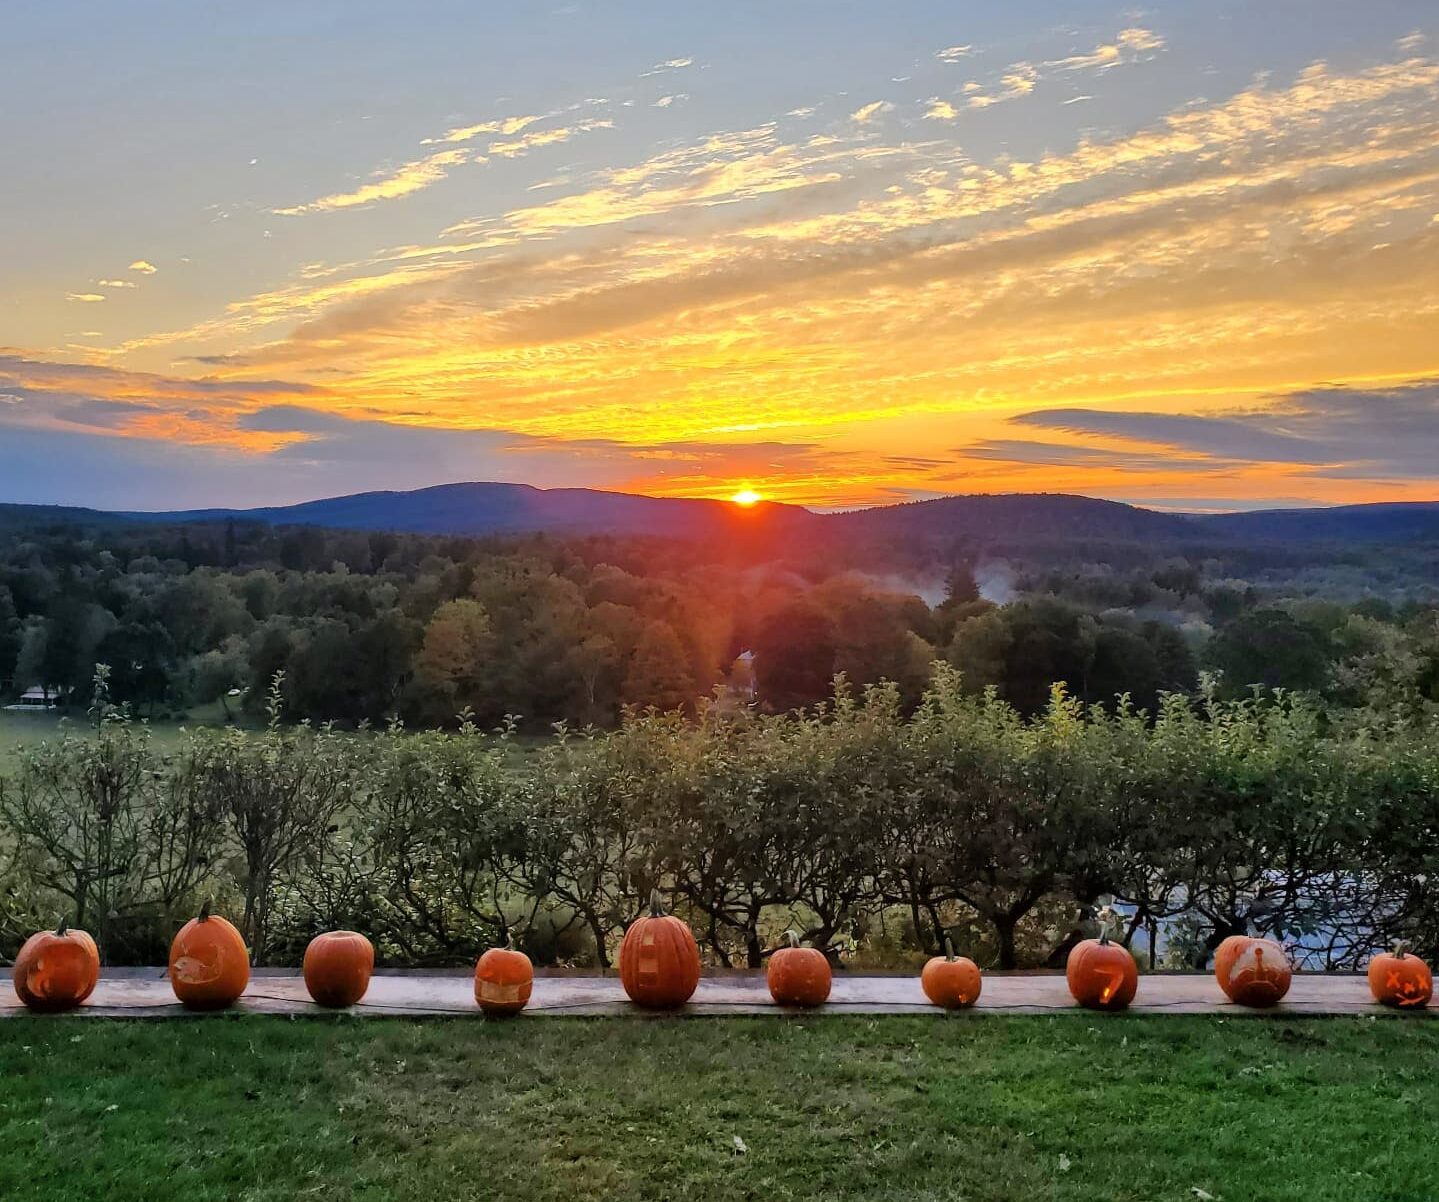 Naumkeag sunset with pumpkins